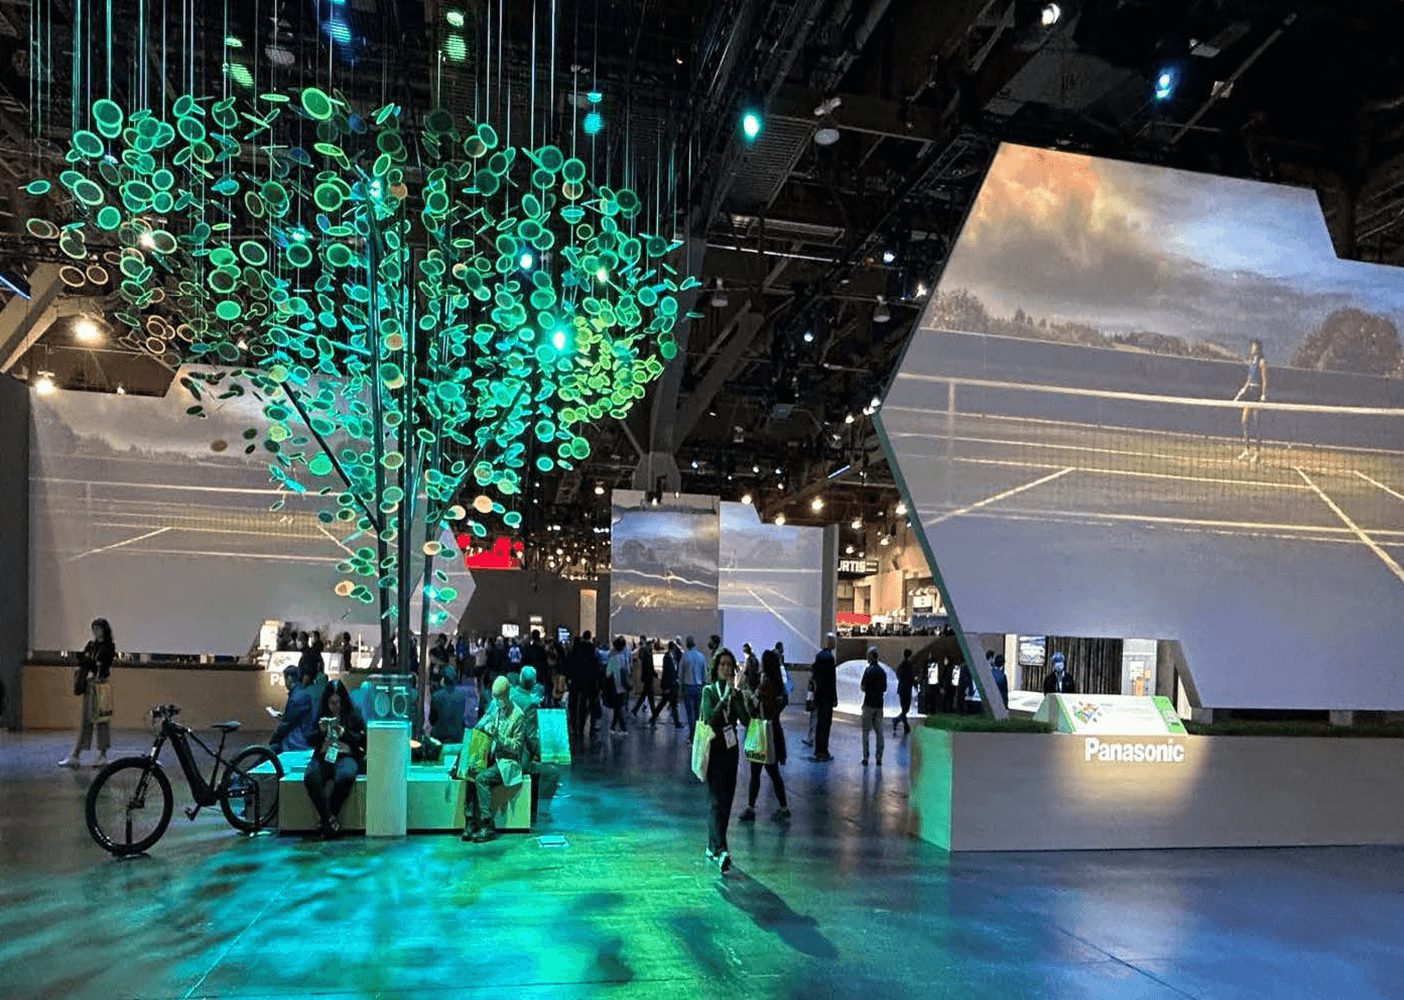 Panasonic's exhibit featured a beautiful lit tree